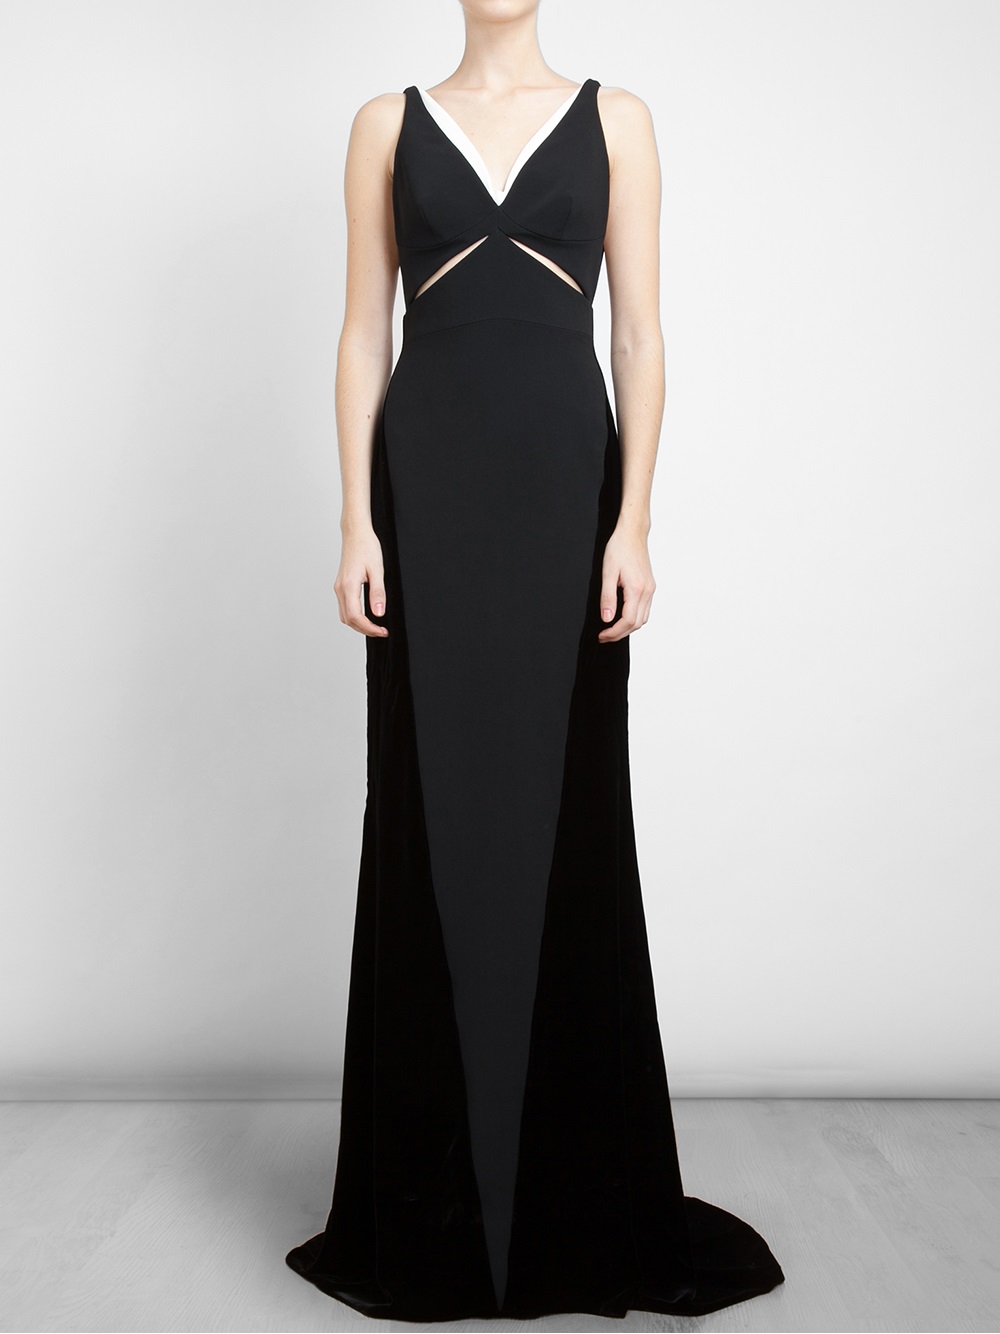 Lyst - Stella Mccartney Crepe and Velvet Gown in Black